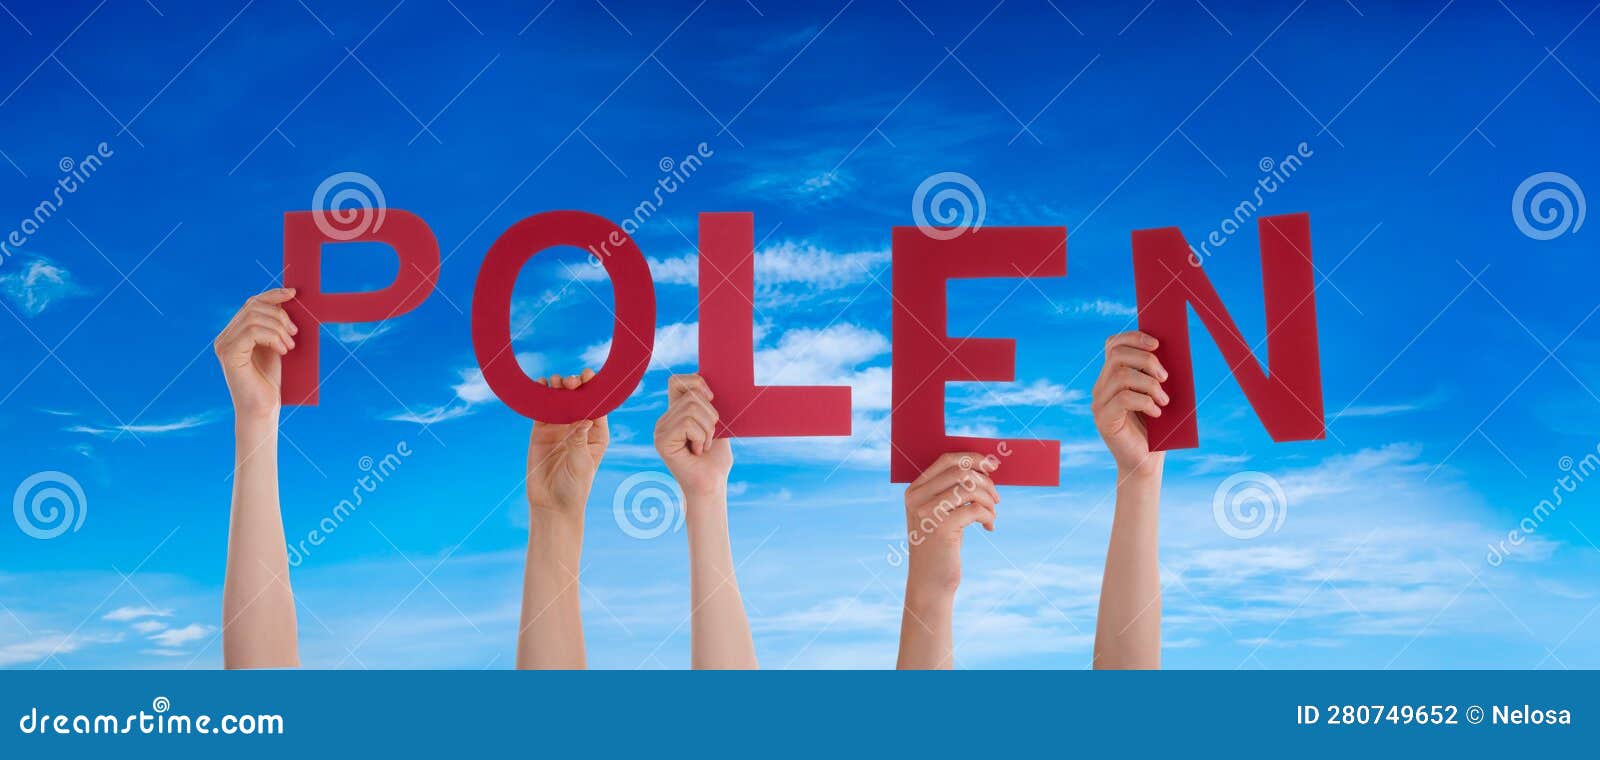 people hands building word polen means poland, blue sky